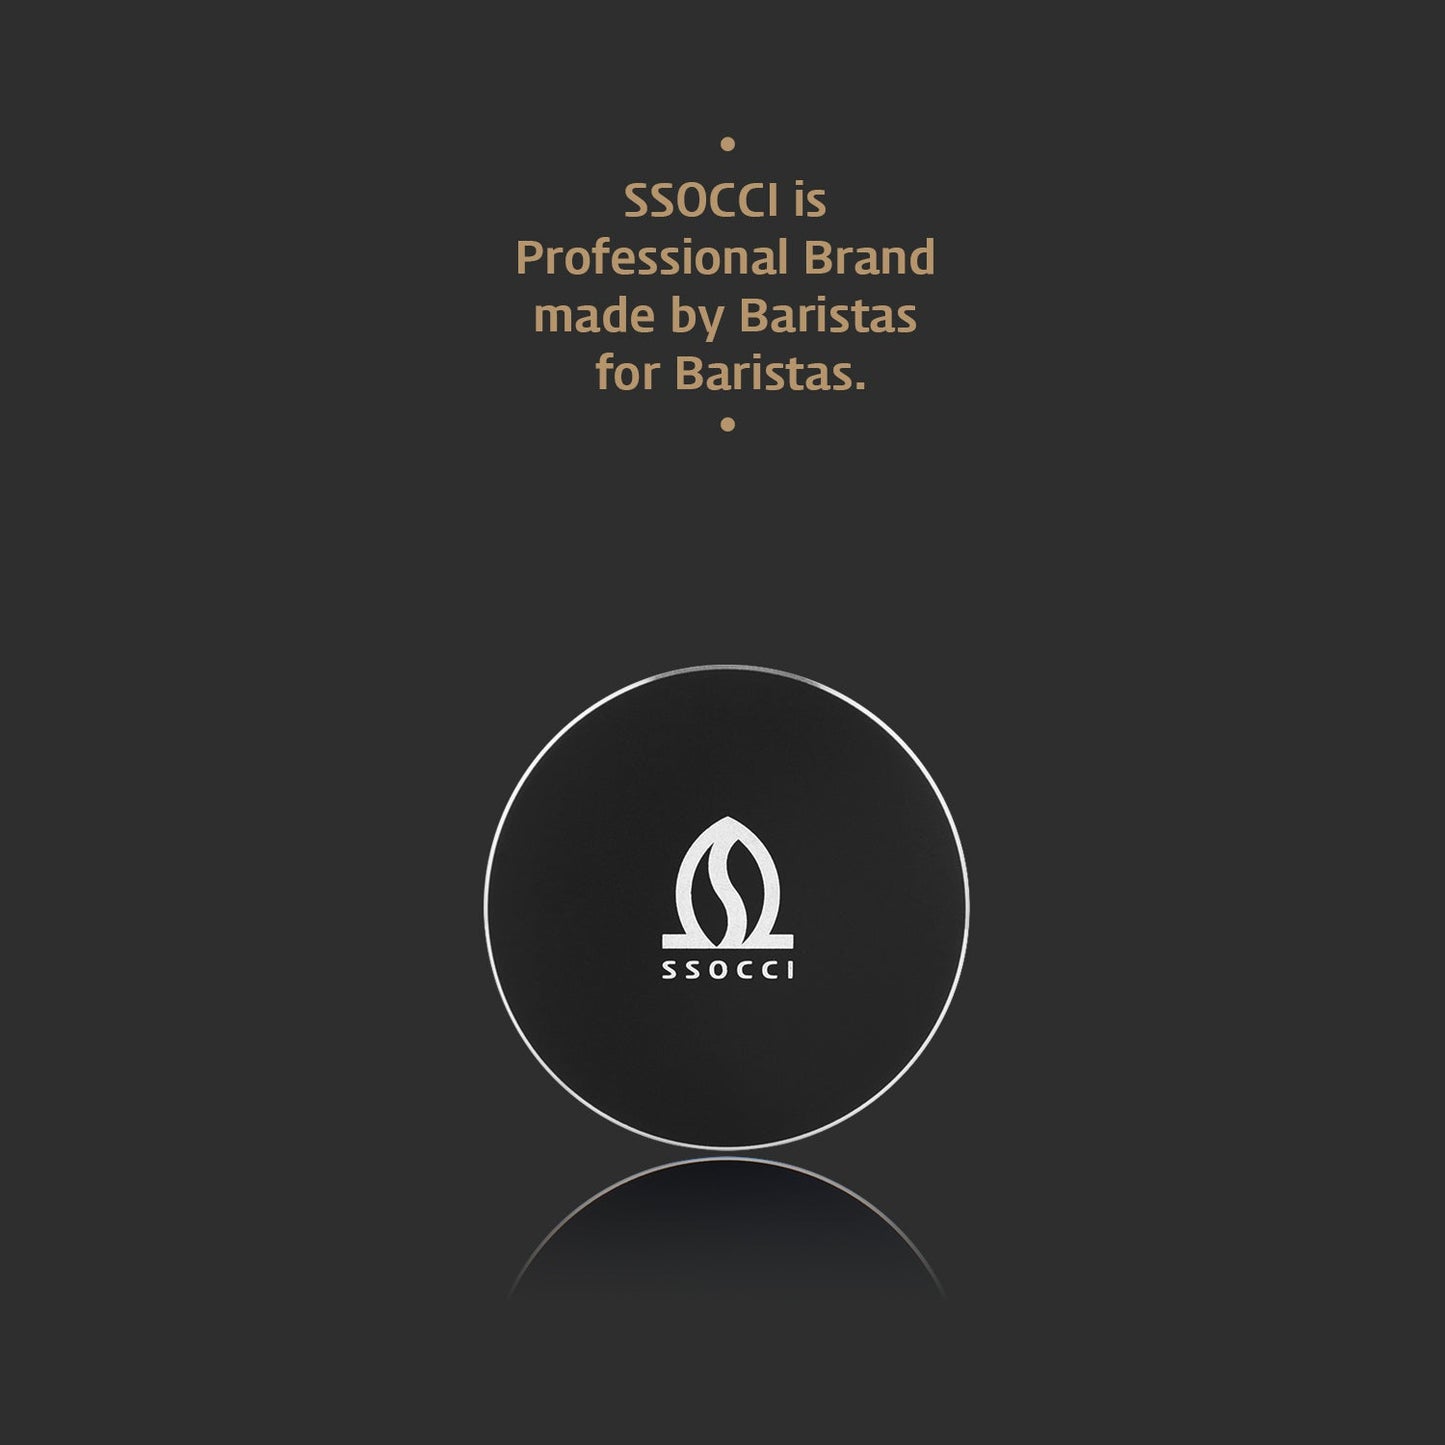 SSOCCI Premium Coffee Distributor 53mm